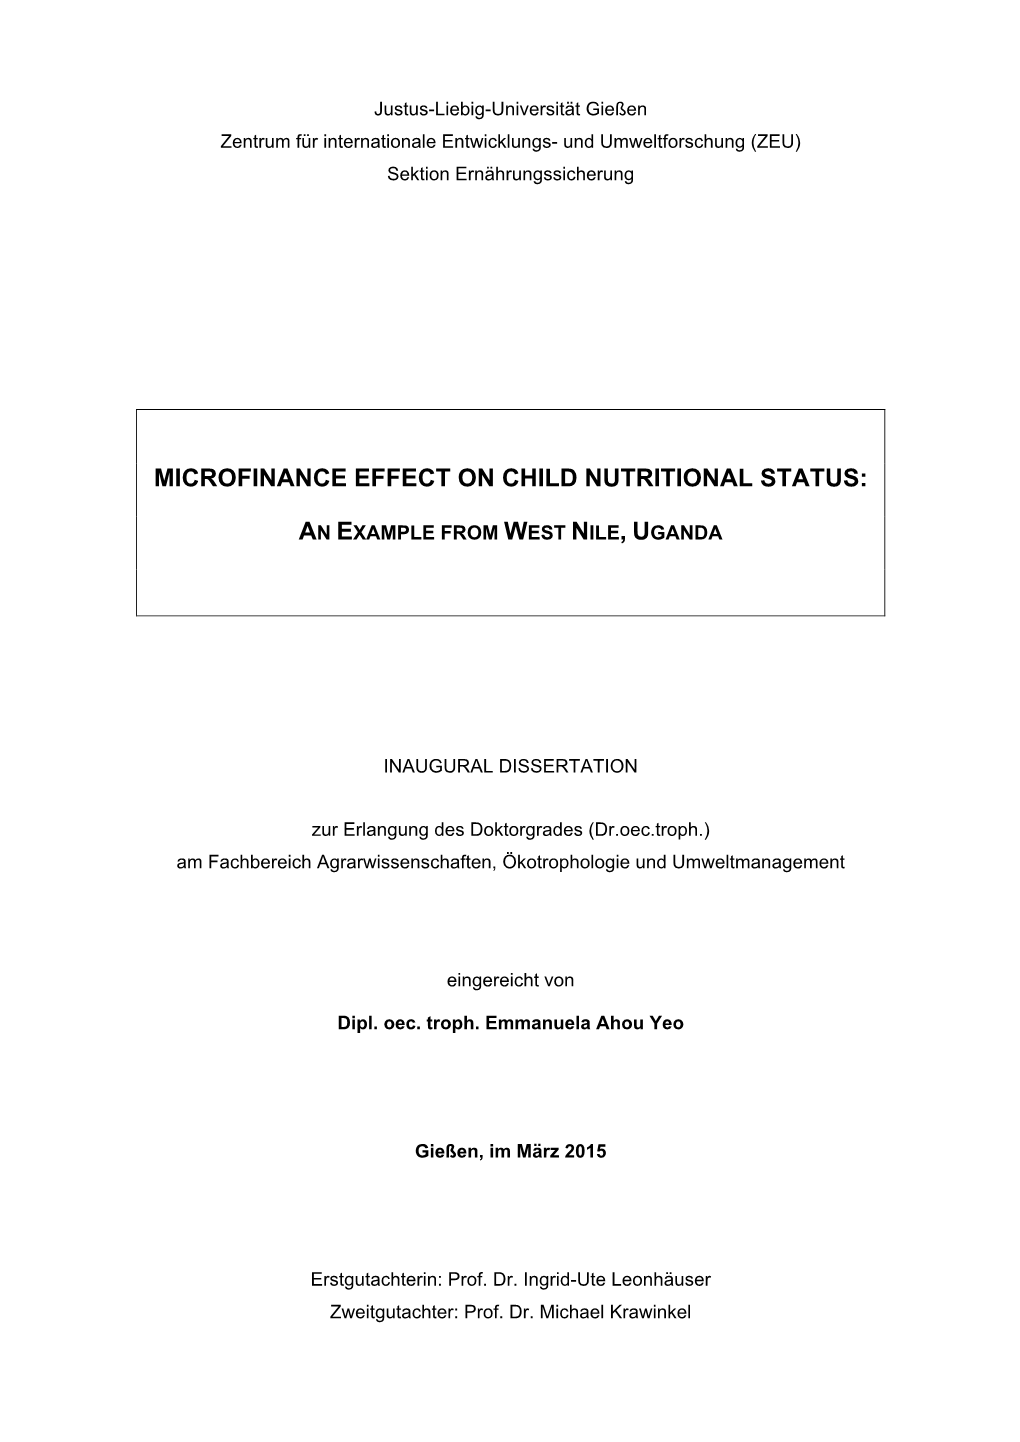 Microfinance Effect on Child Nutritional Status